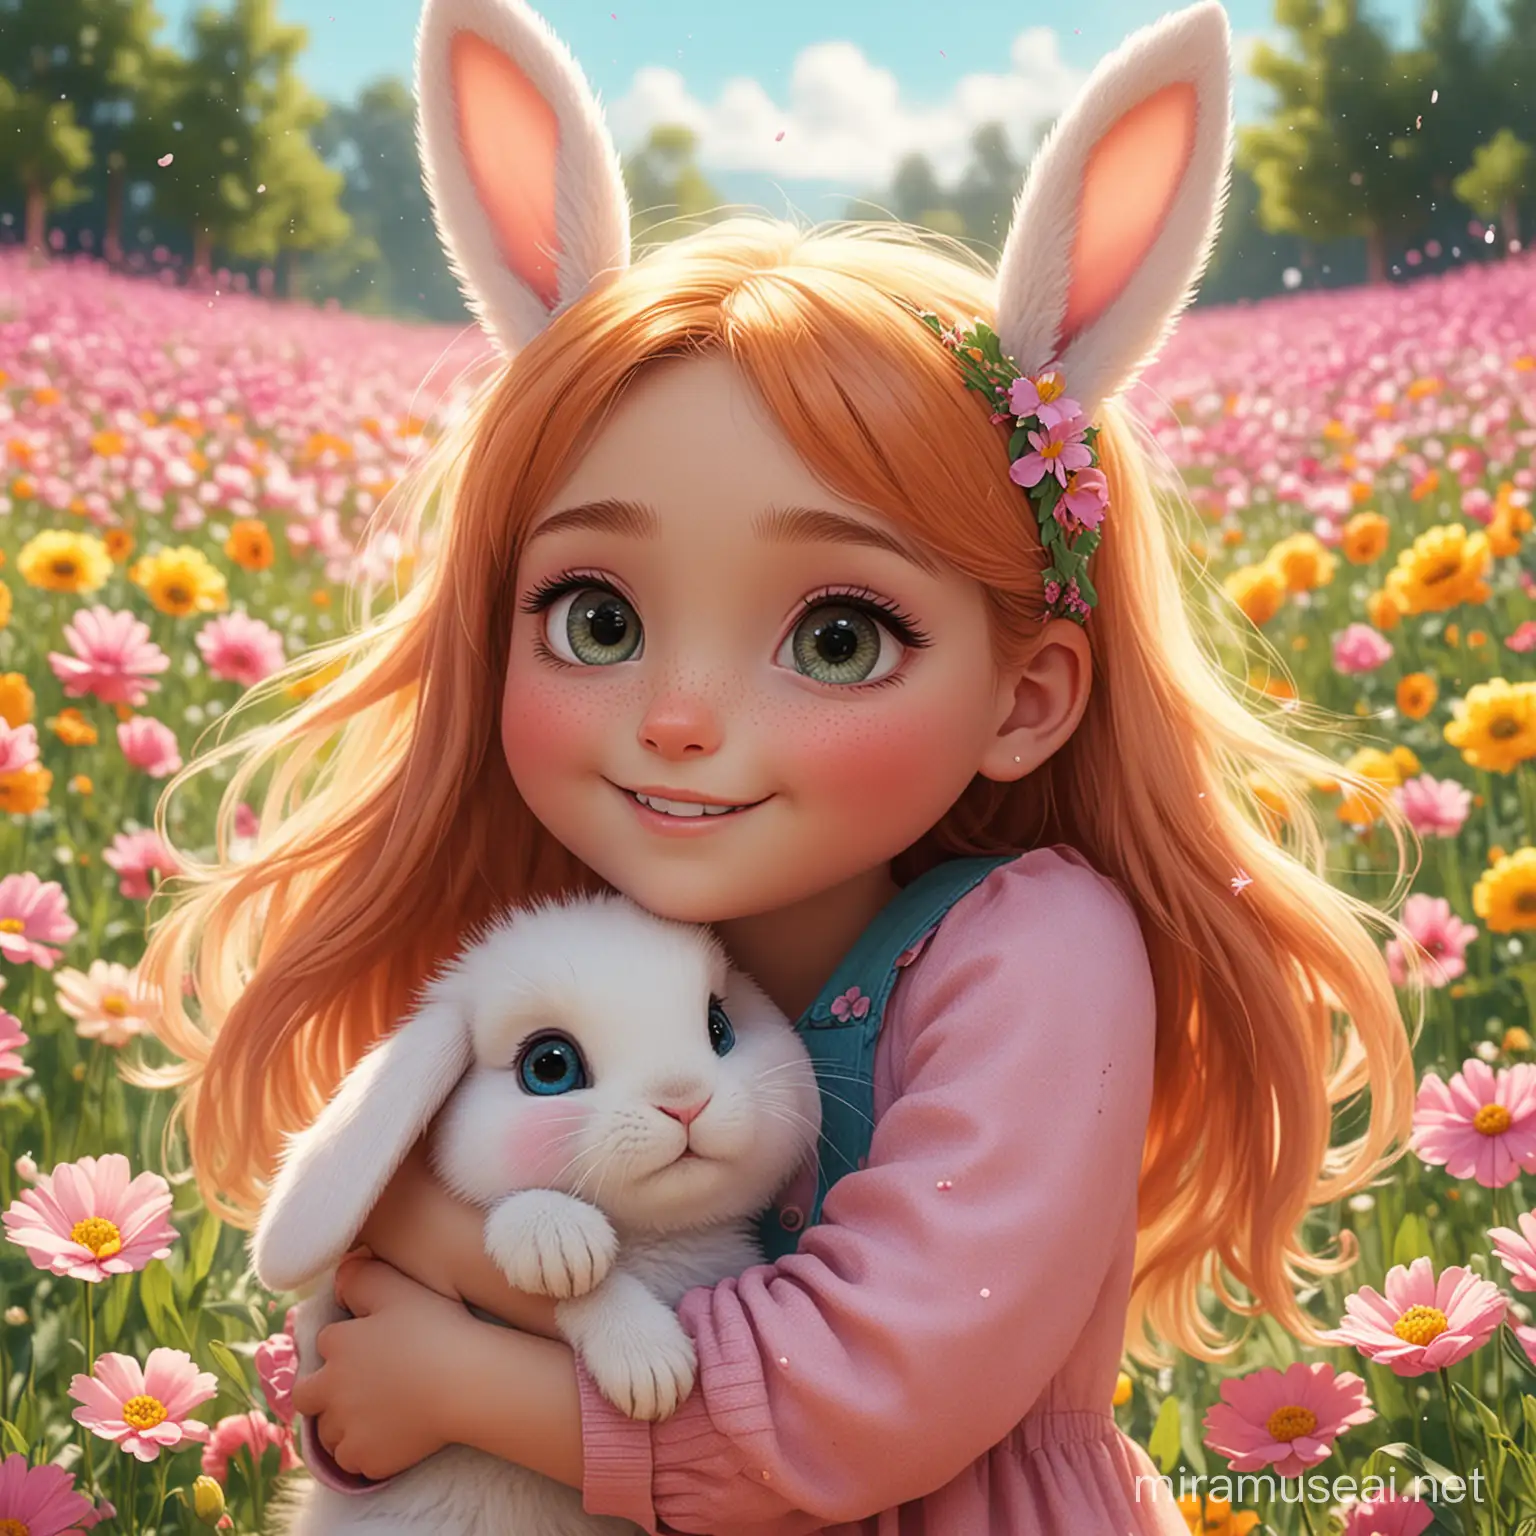 Joyful Reunion Cute Bunny Cecilia and Friend Embrace in Colorful Flower Field